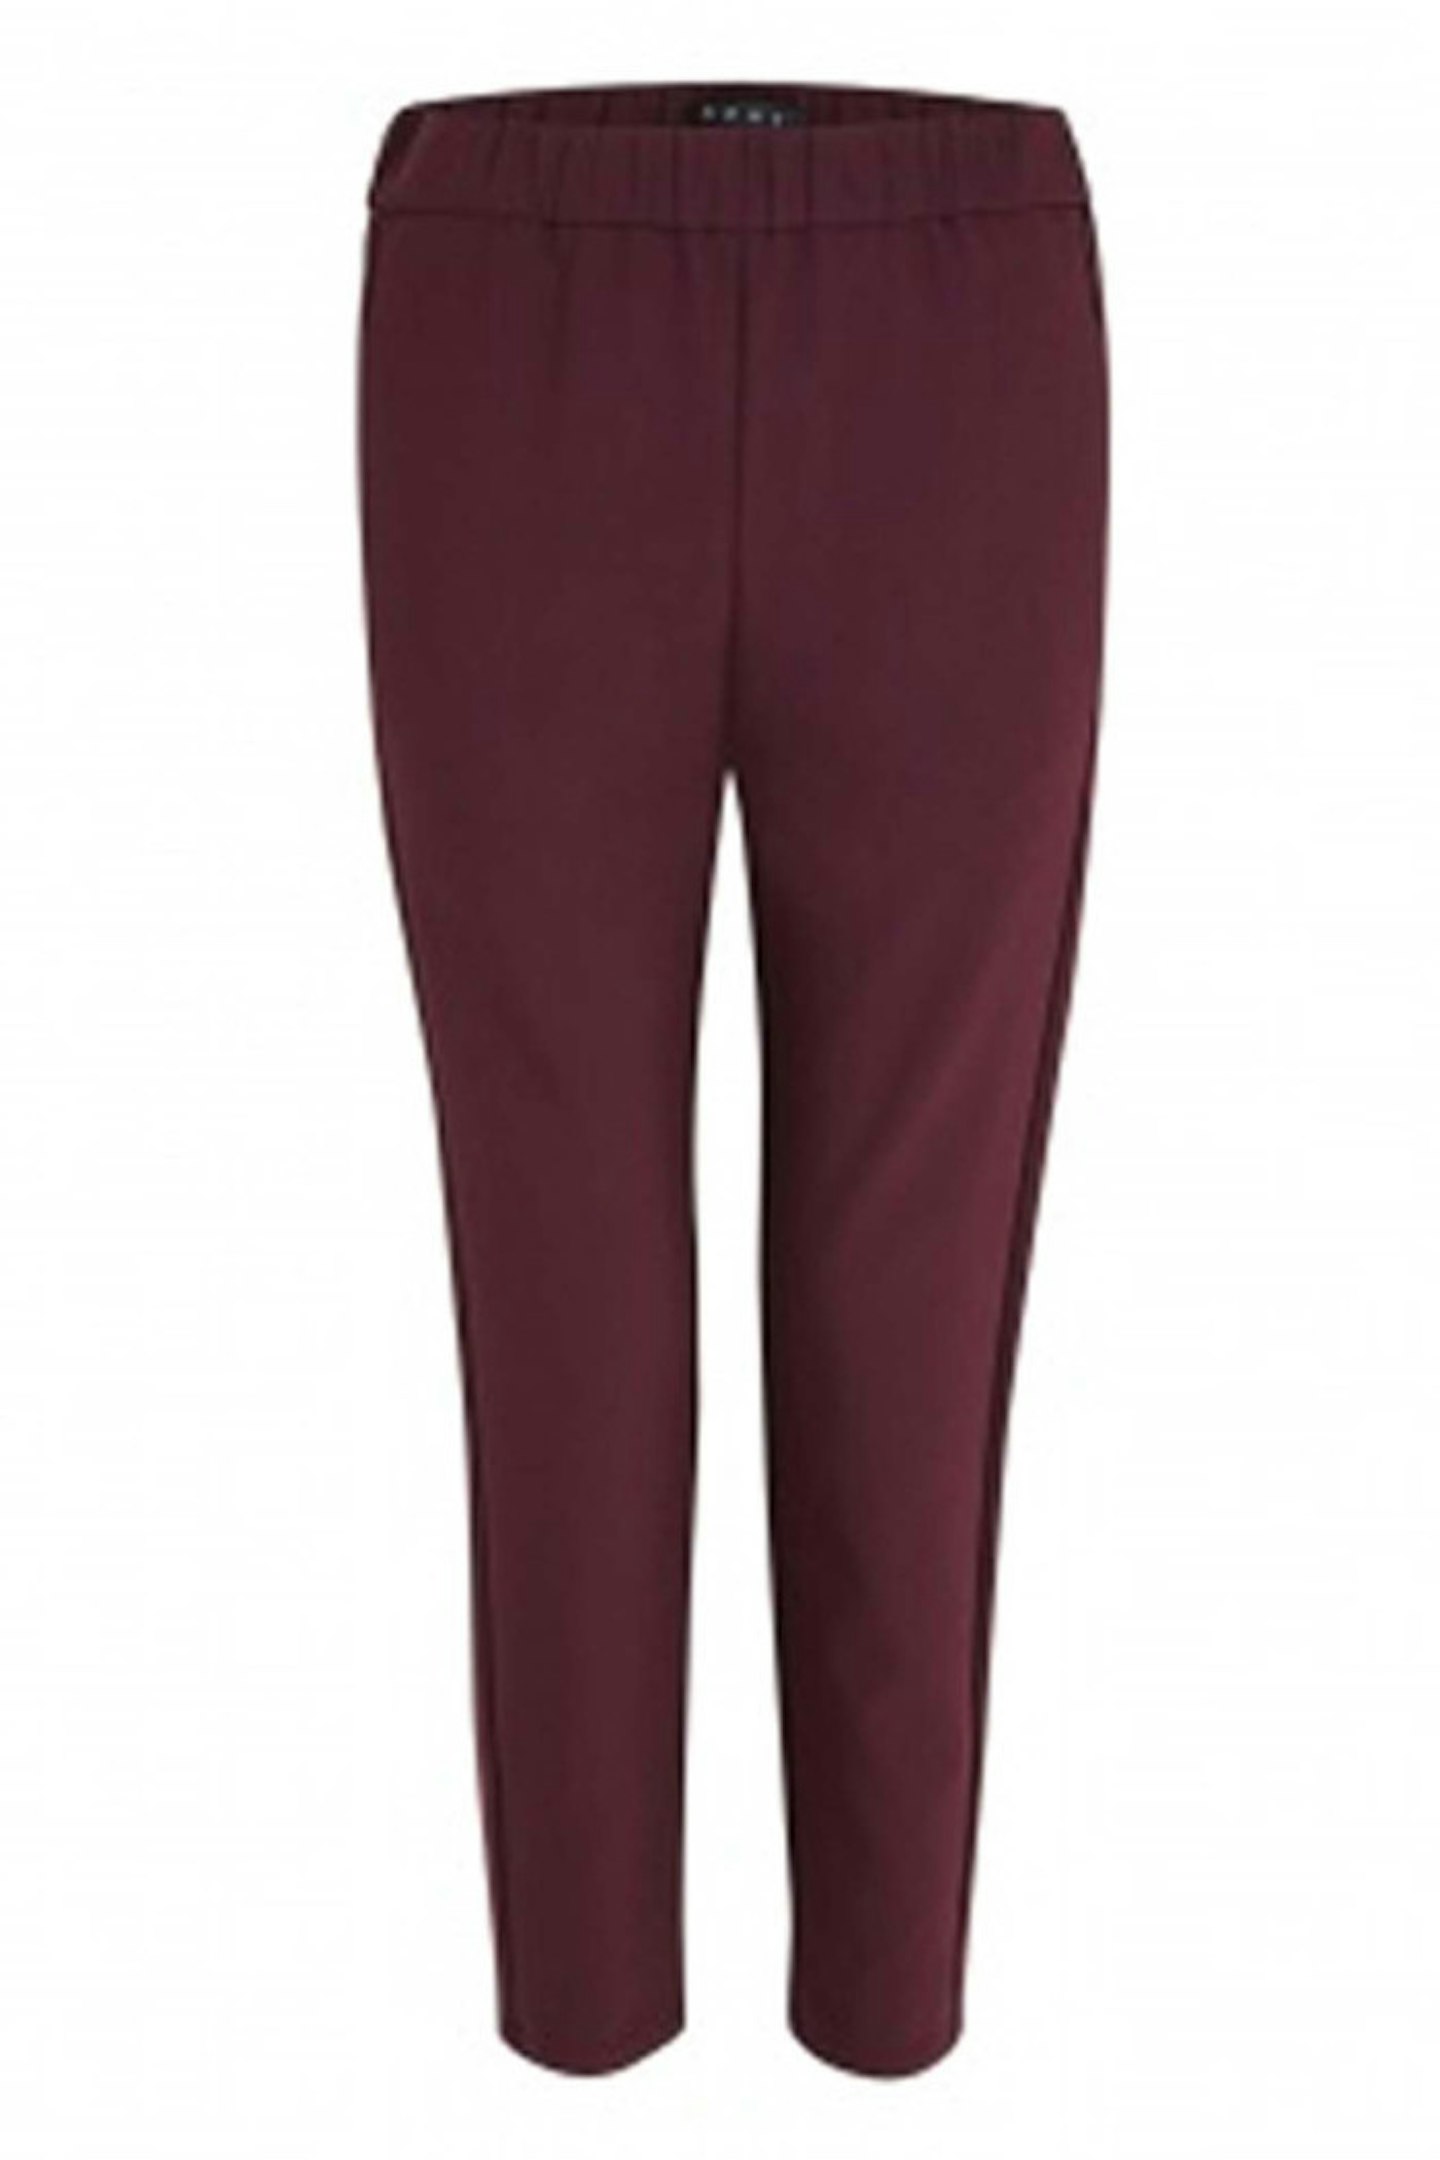 25. Burgandy twill trousers, £246, Theory at My-Wardrobe